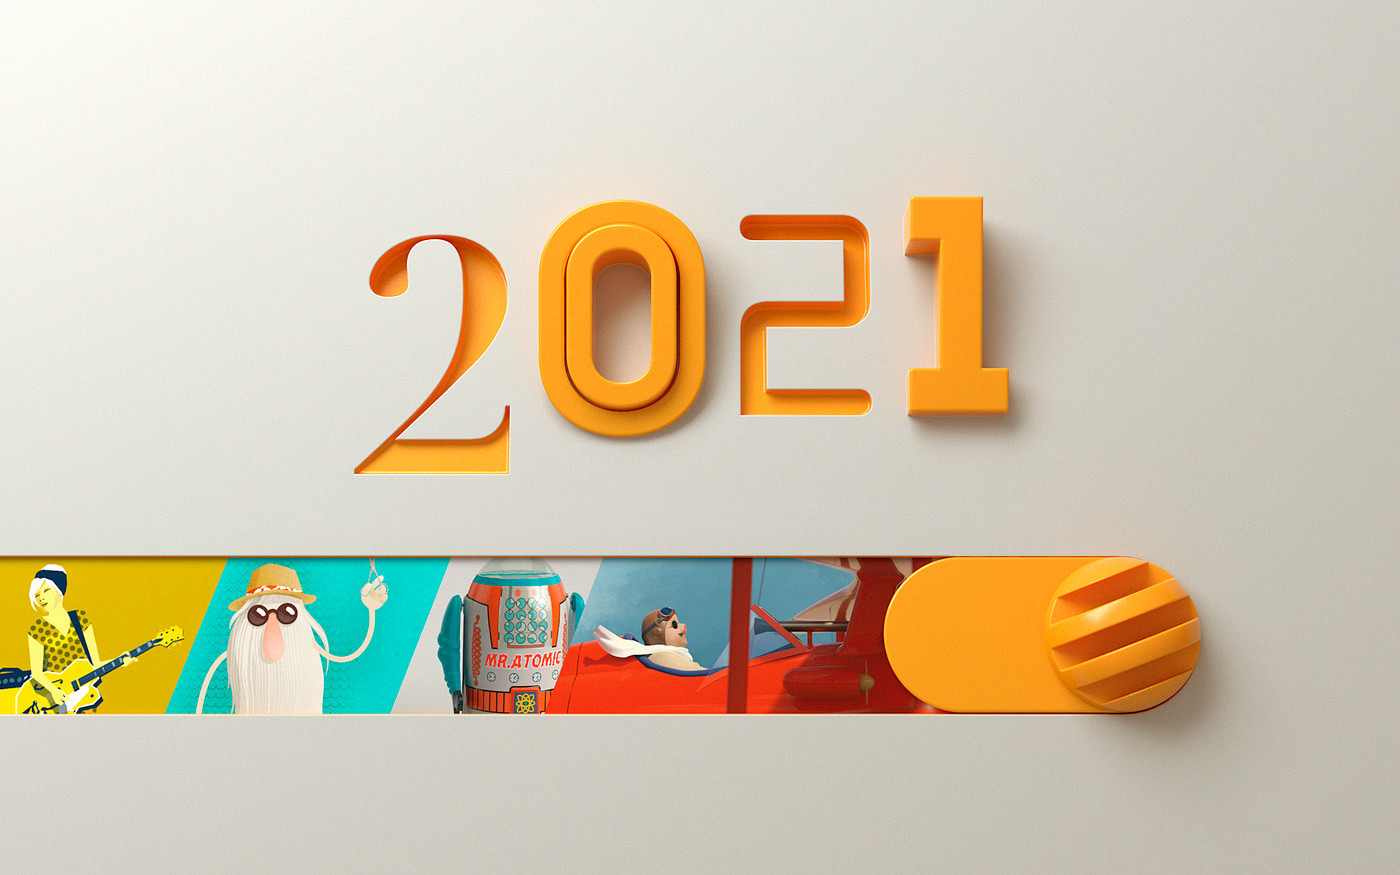 #2021 3D type 2021 newyear modo